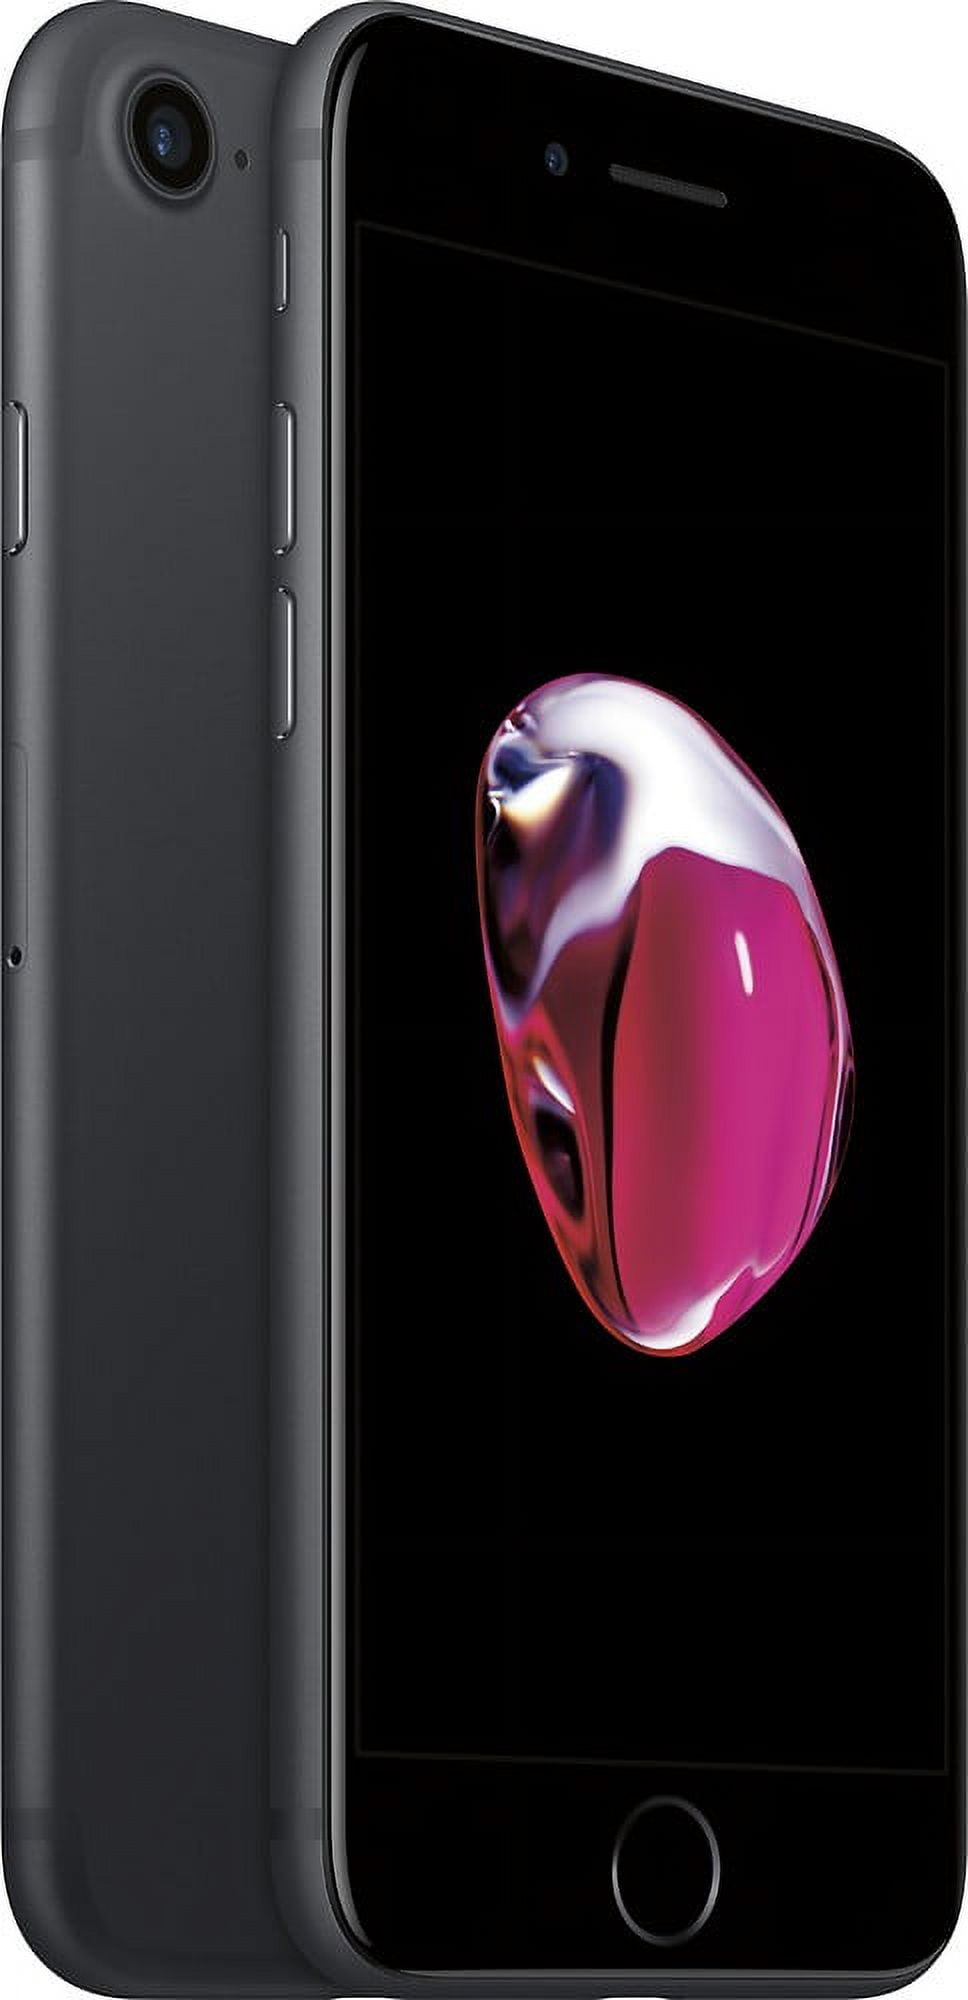 Restored Apple iPhone 7 128GB, Black - Unlocked GSM (Refurbished)